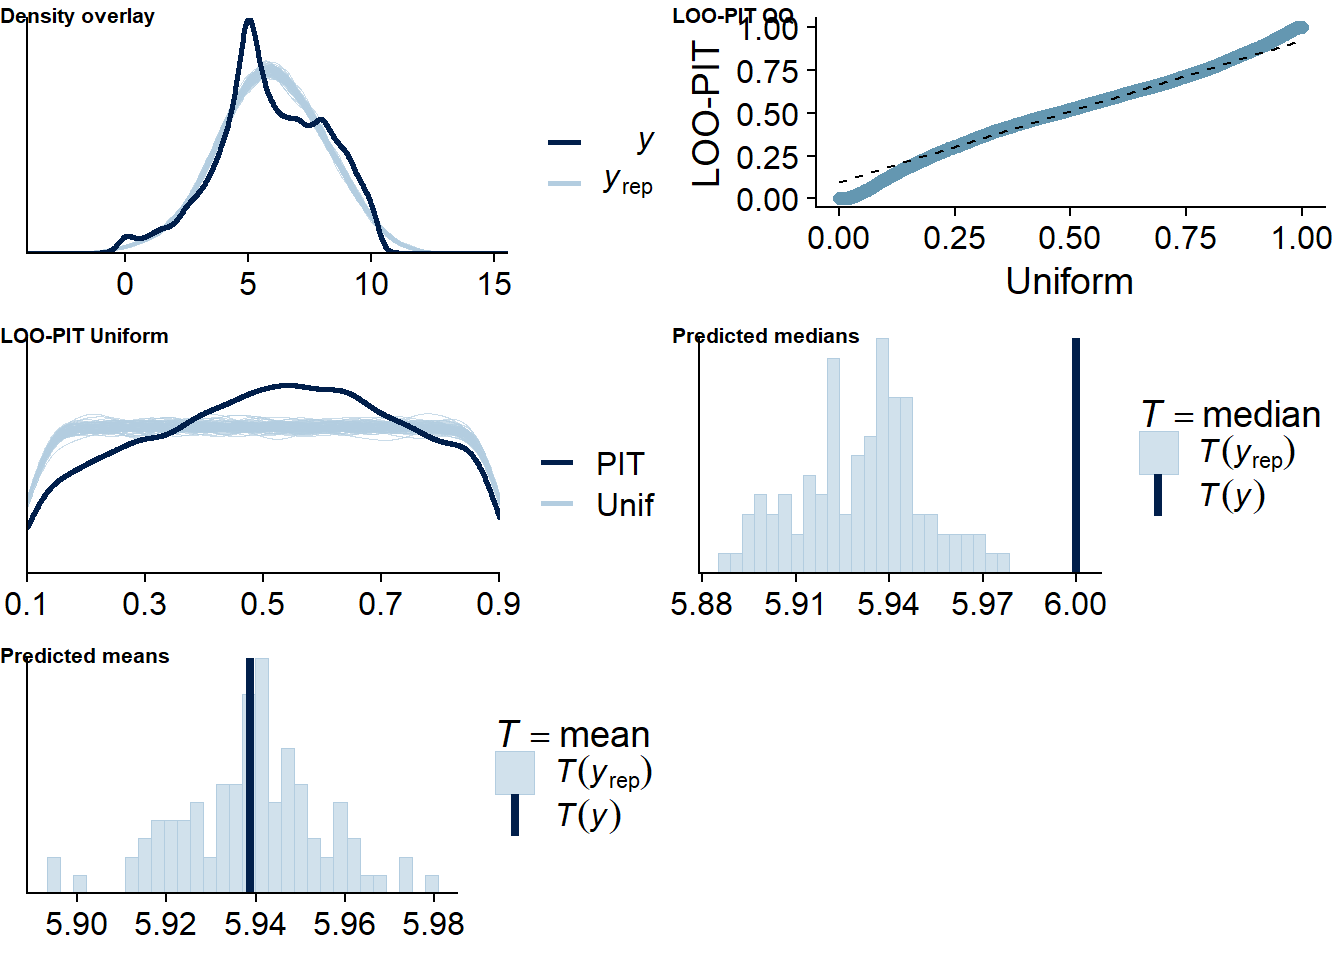 Posterior predictive checks for Music-Affect model